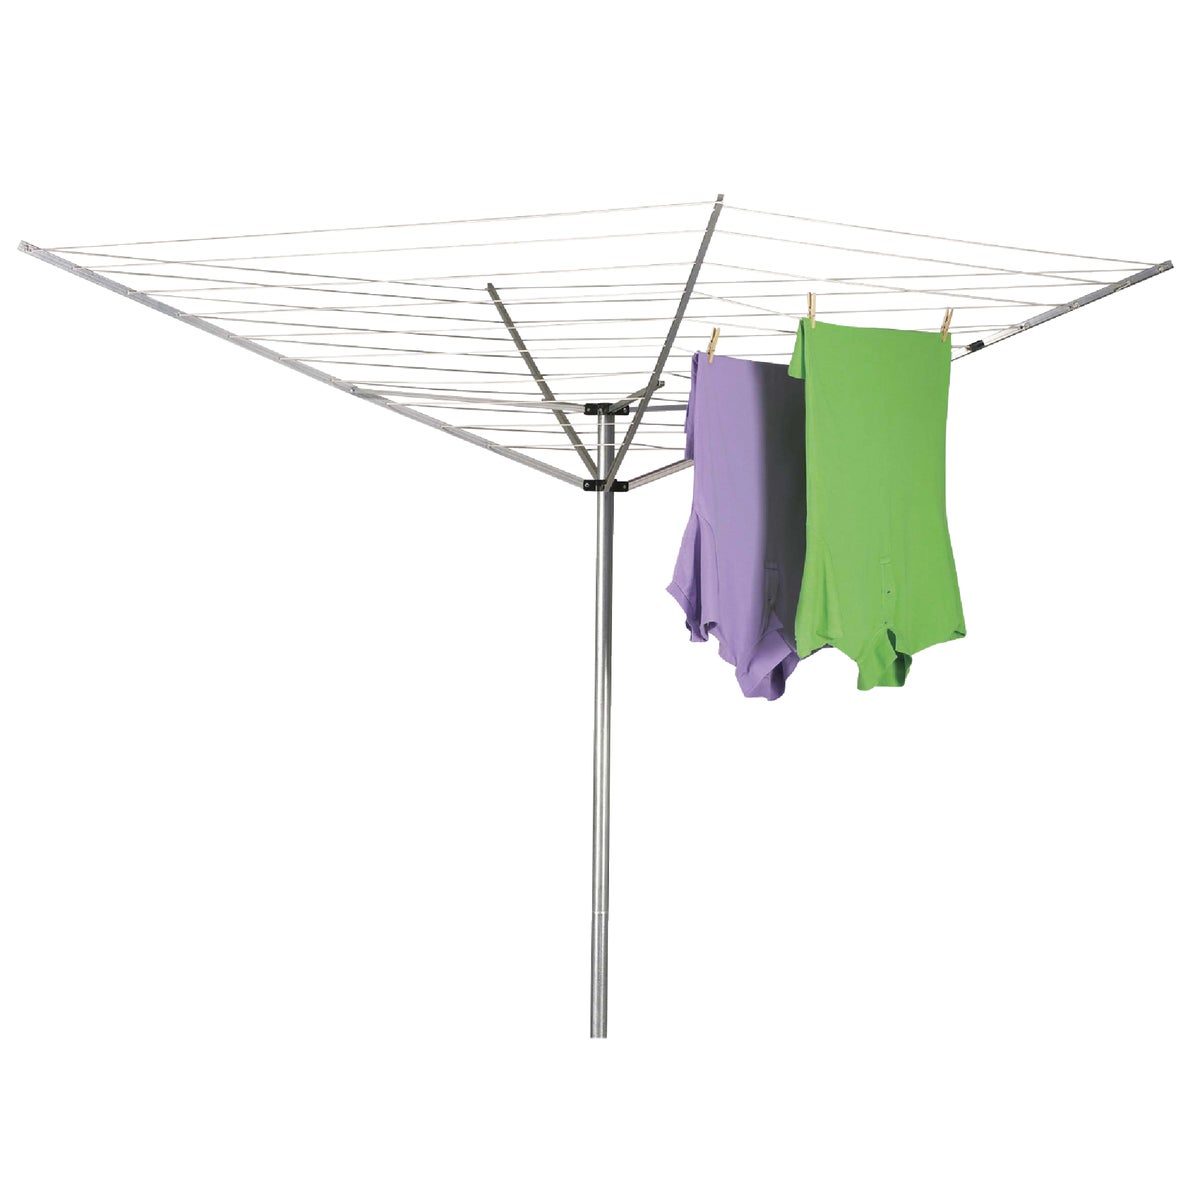 Item 621935, Umbrella style clothes dryer with galvanized steel, 2-piece center post.